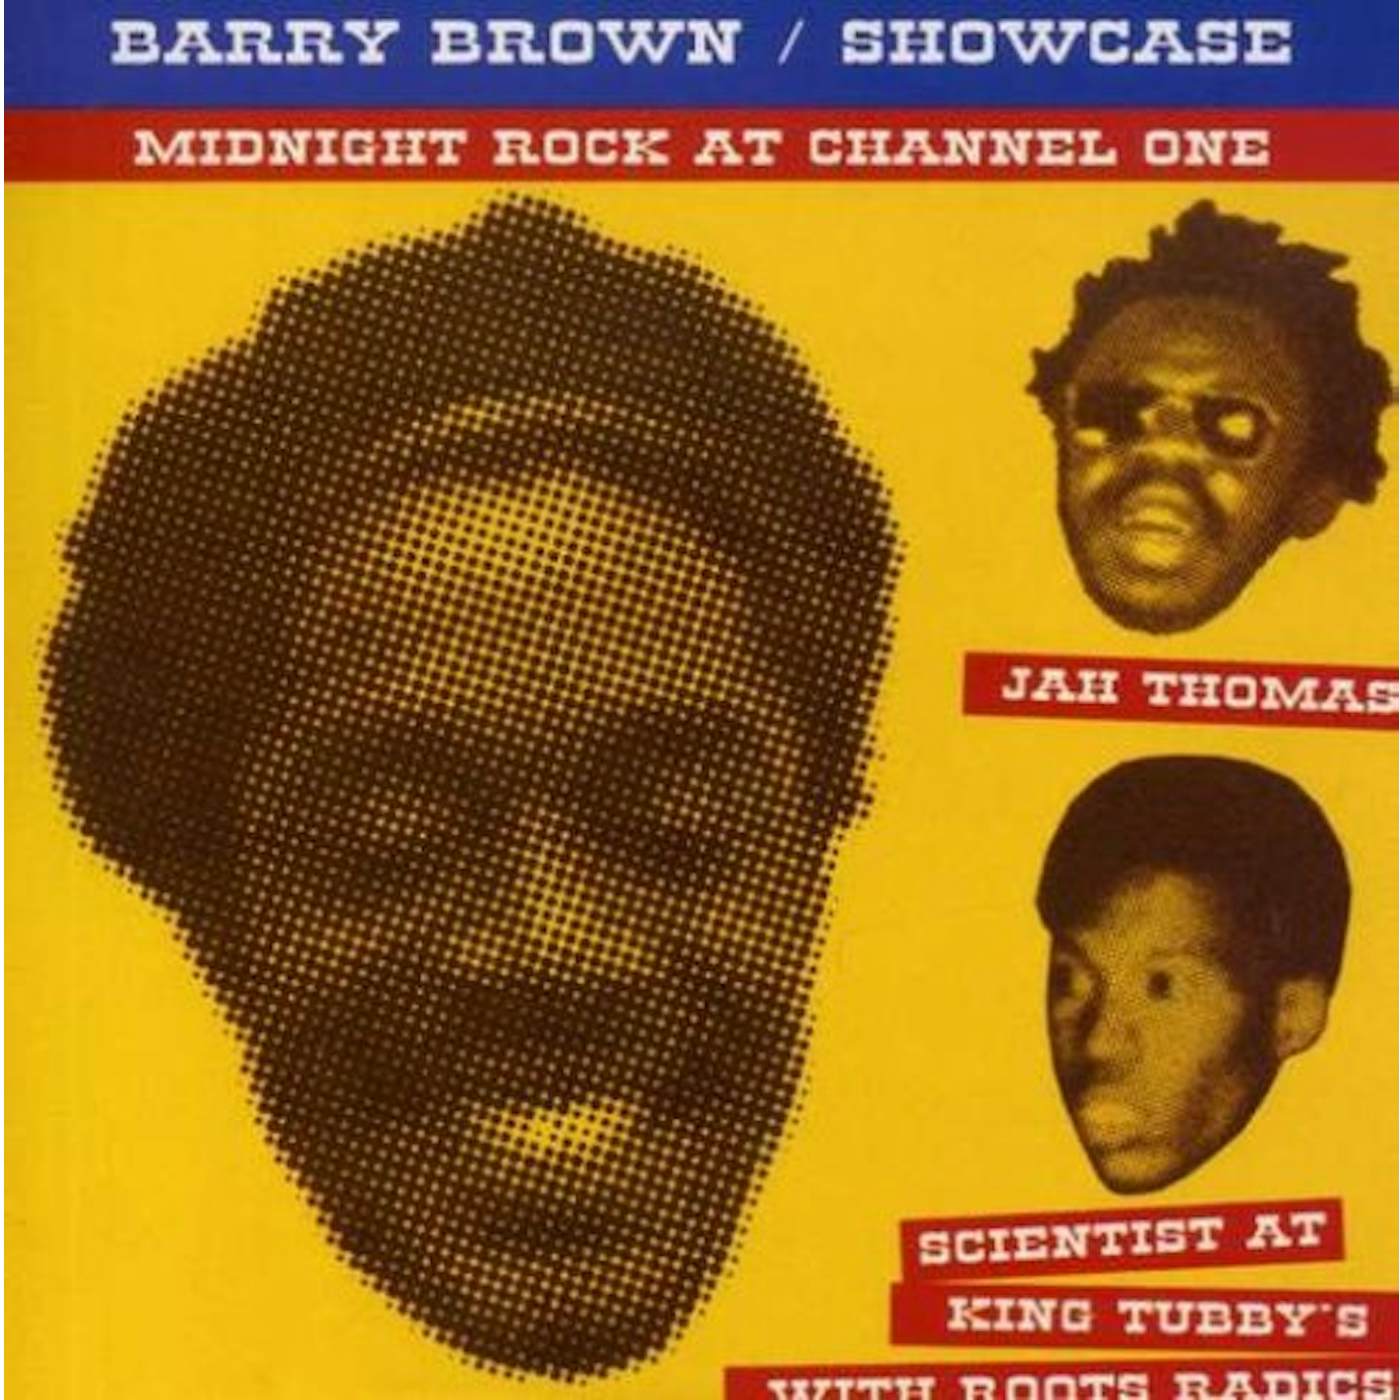 Barry Brown SHOWCASE CD